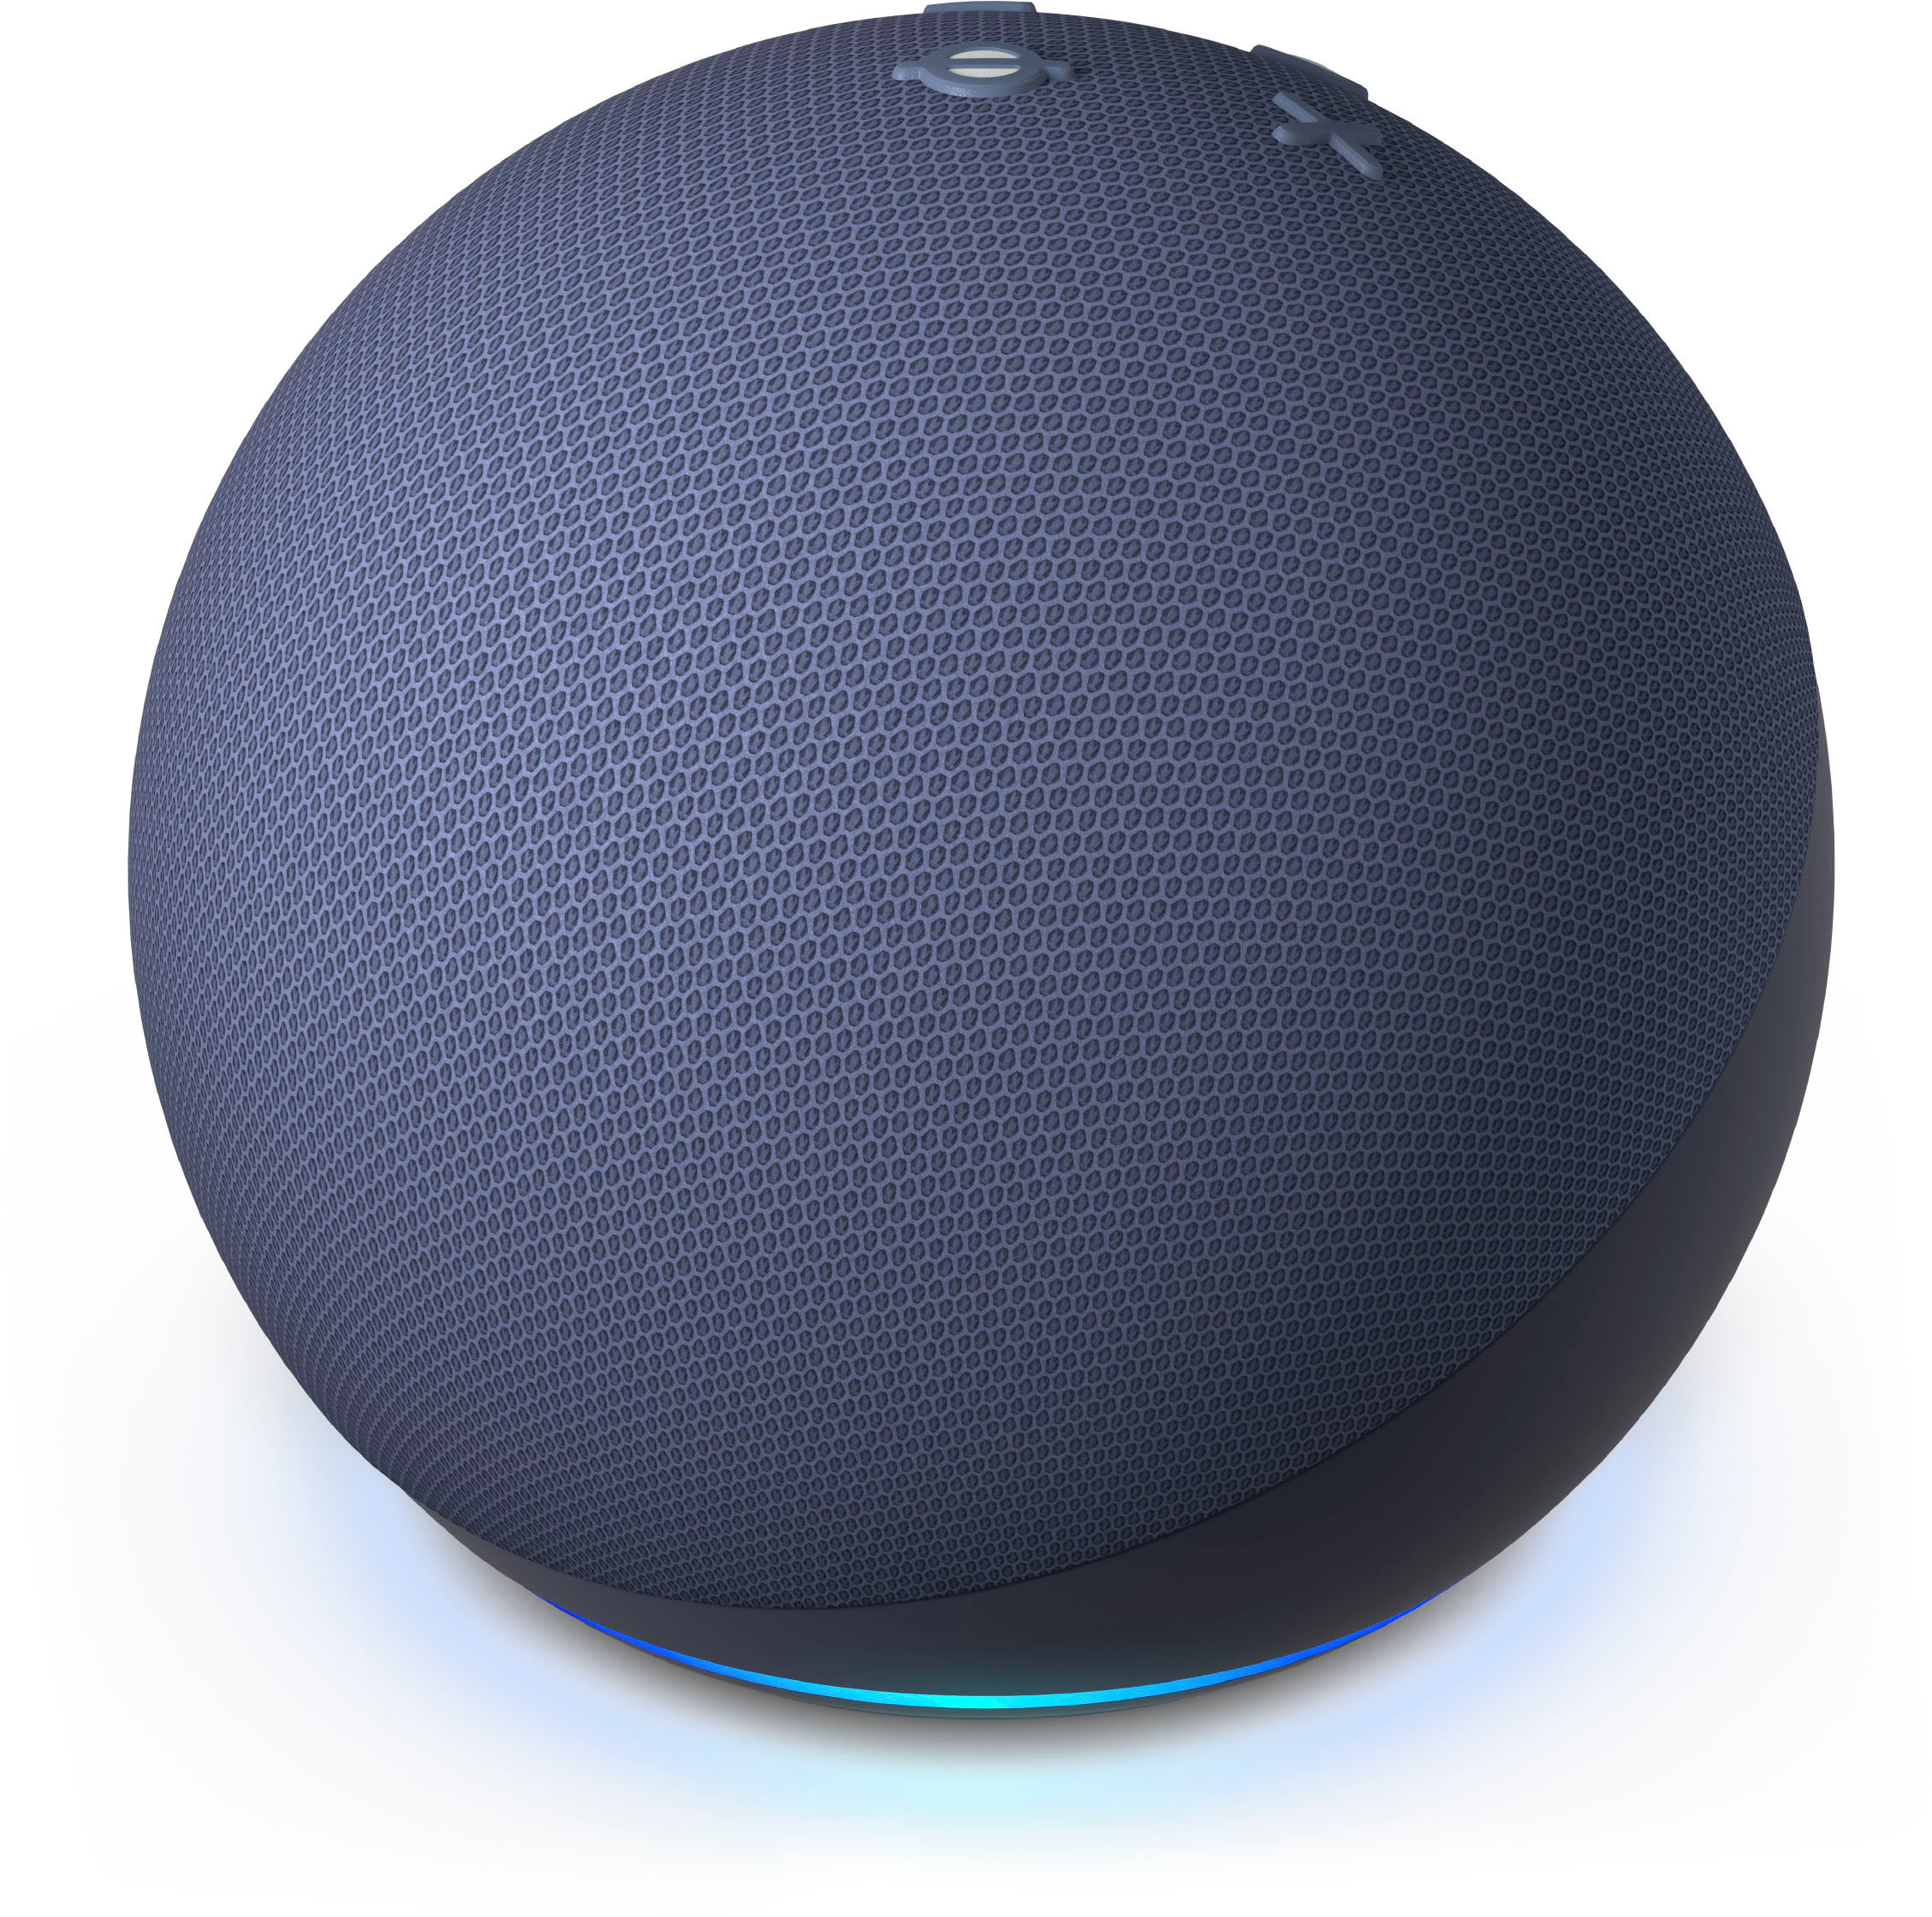 Alexa Echo Dot 5th Generation Smart Speaker Black NEW IN BOX